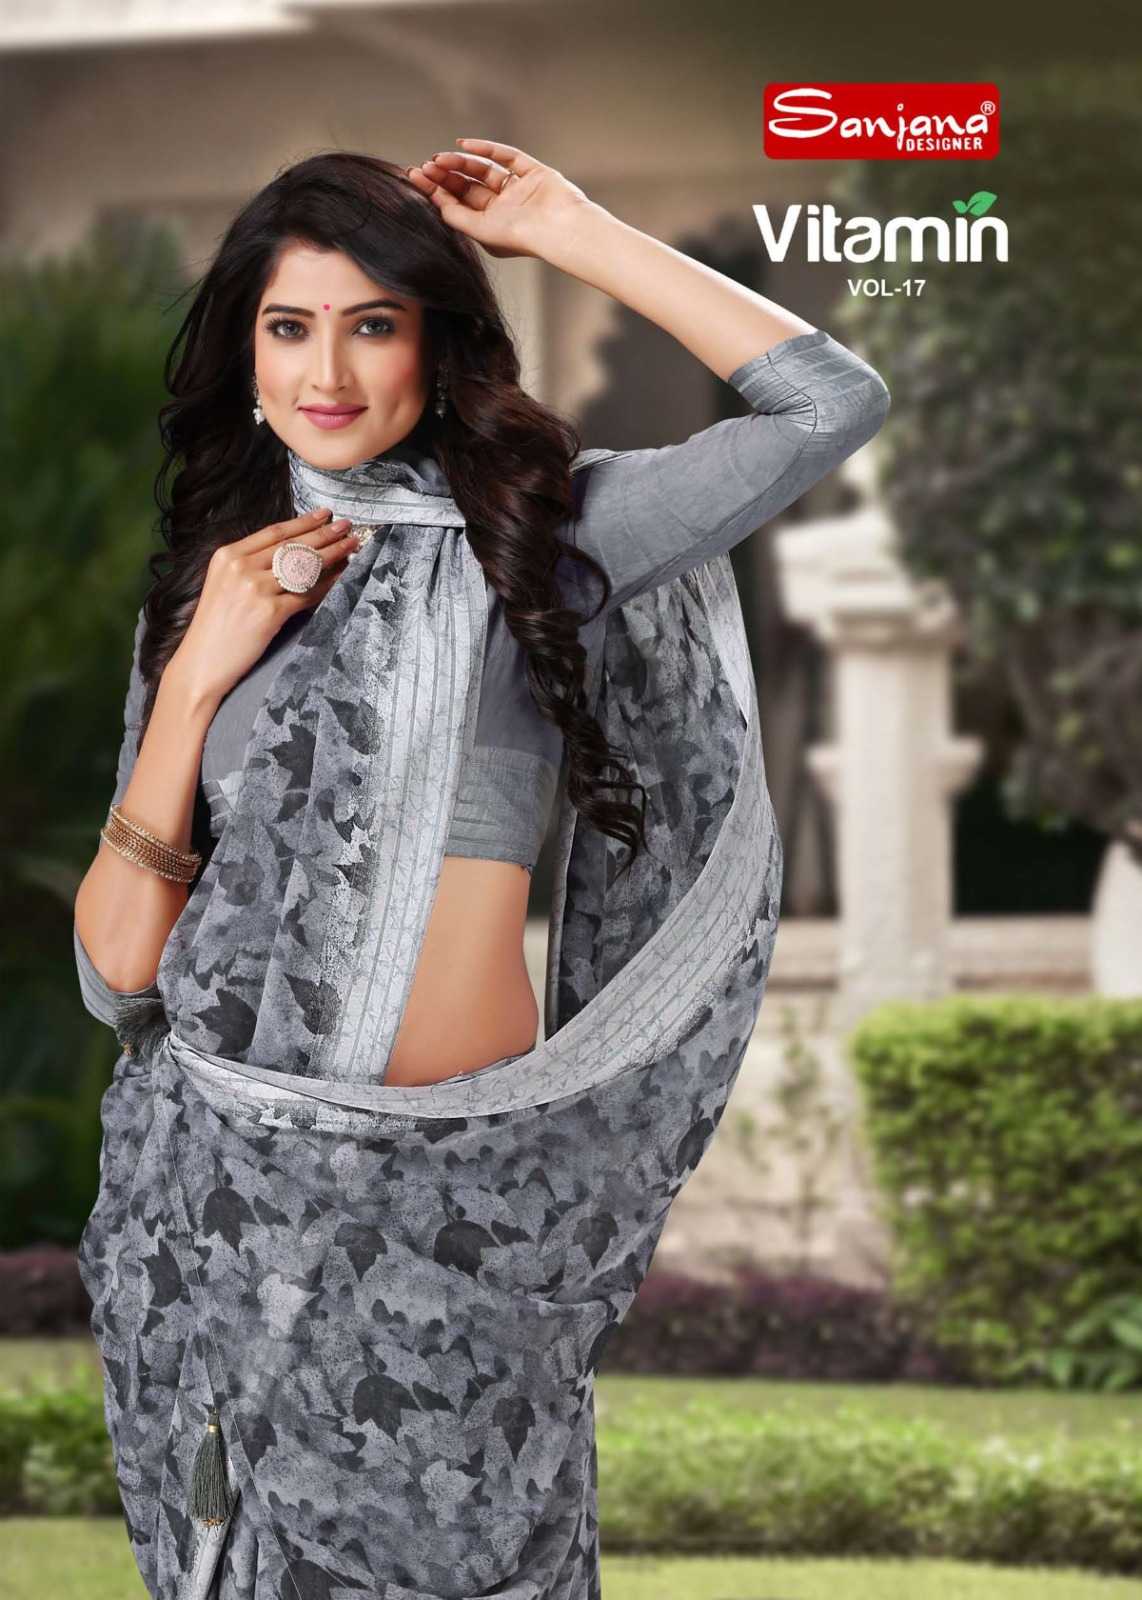 vitamin vol 17 by sanjana designer fancy adorable weightless sarees catalog